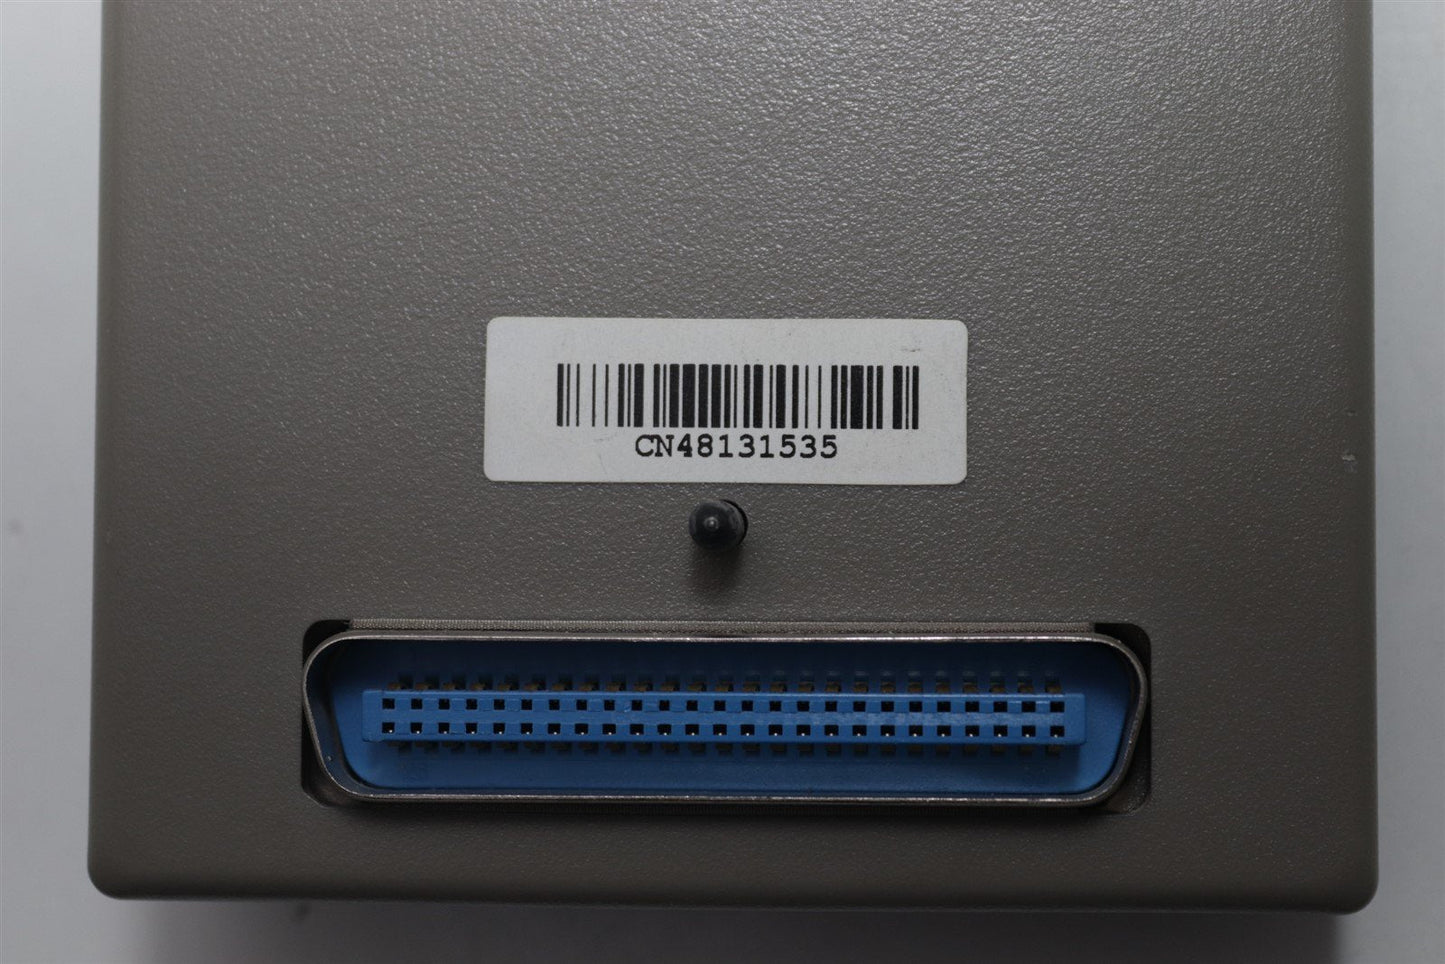 Agilent Keysight DSO3000 Series Oscilloscope N2861A Extension Module